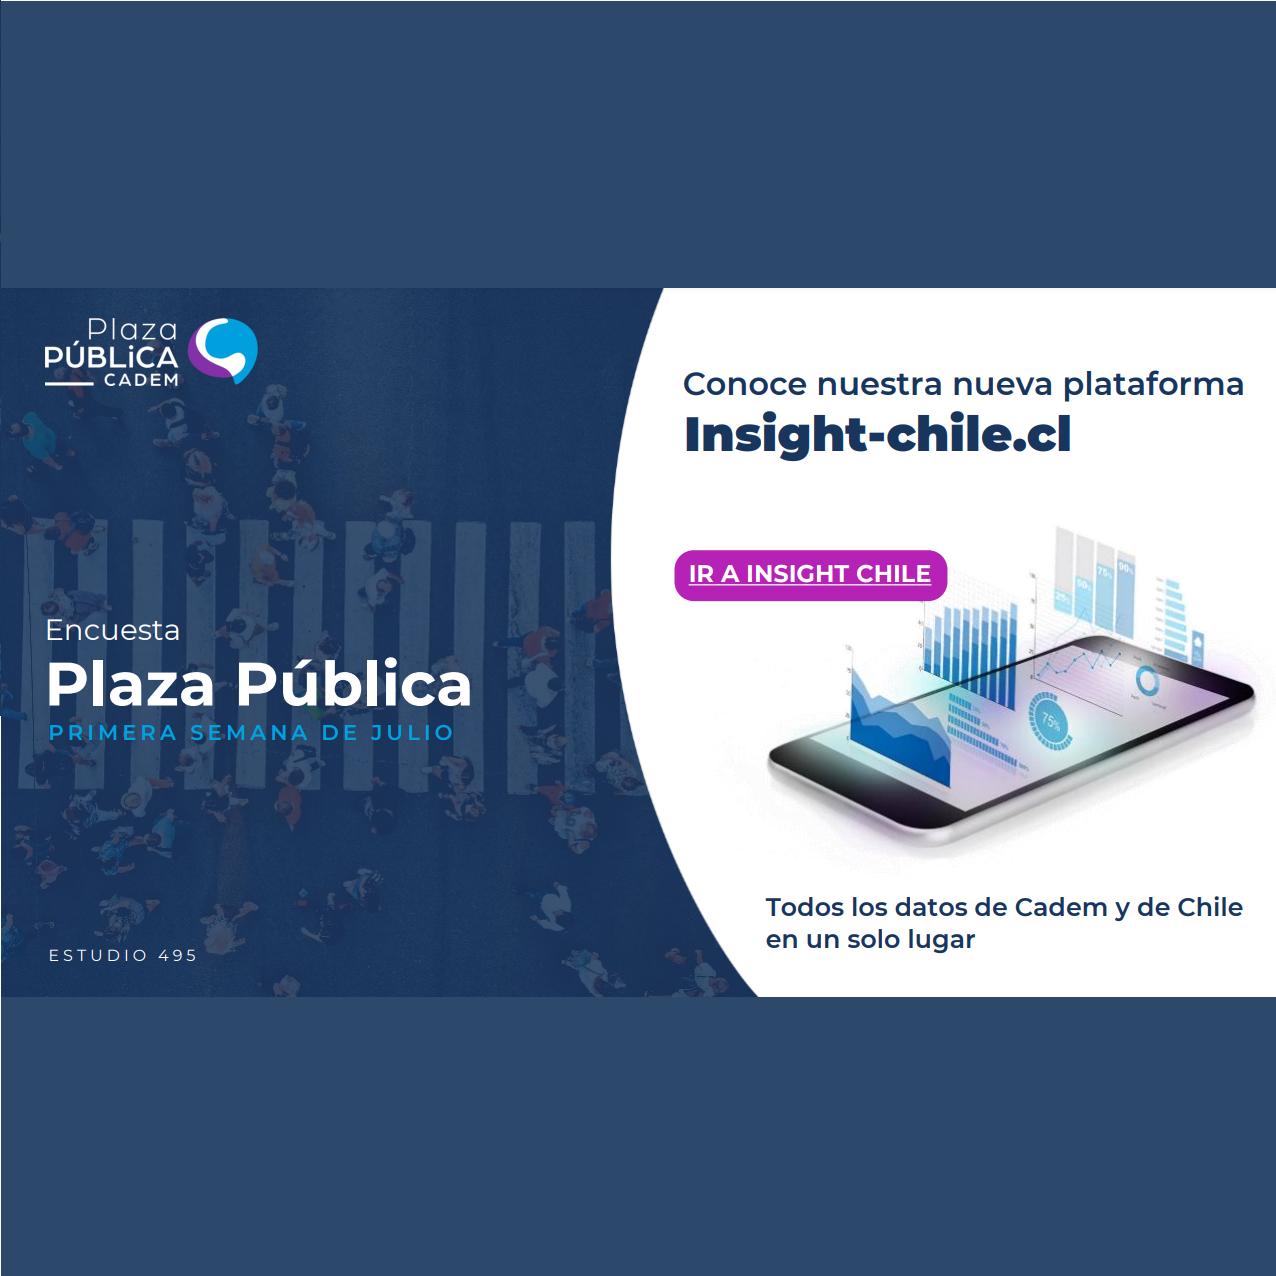 Estudio: Encuesta Plaza Pública – 1ra semana de julio